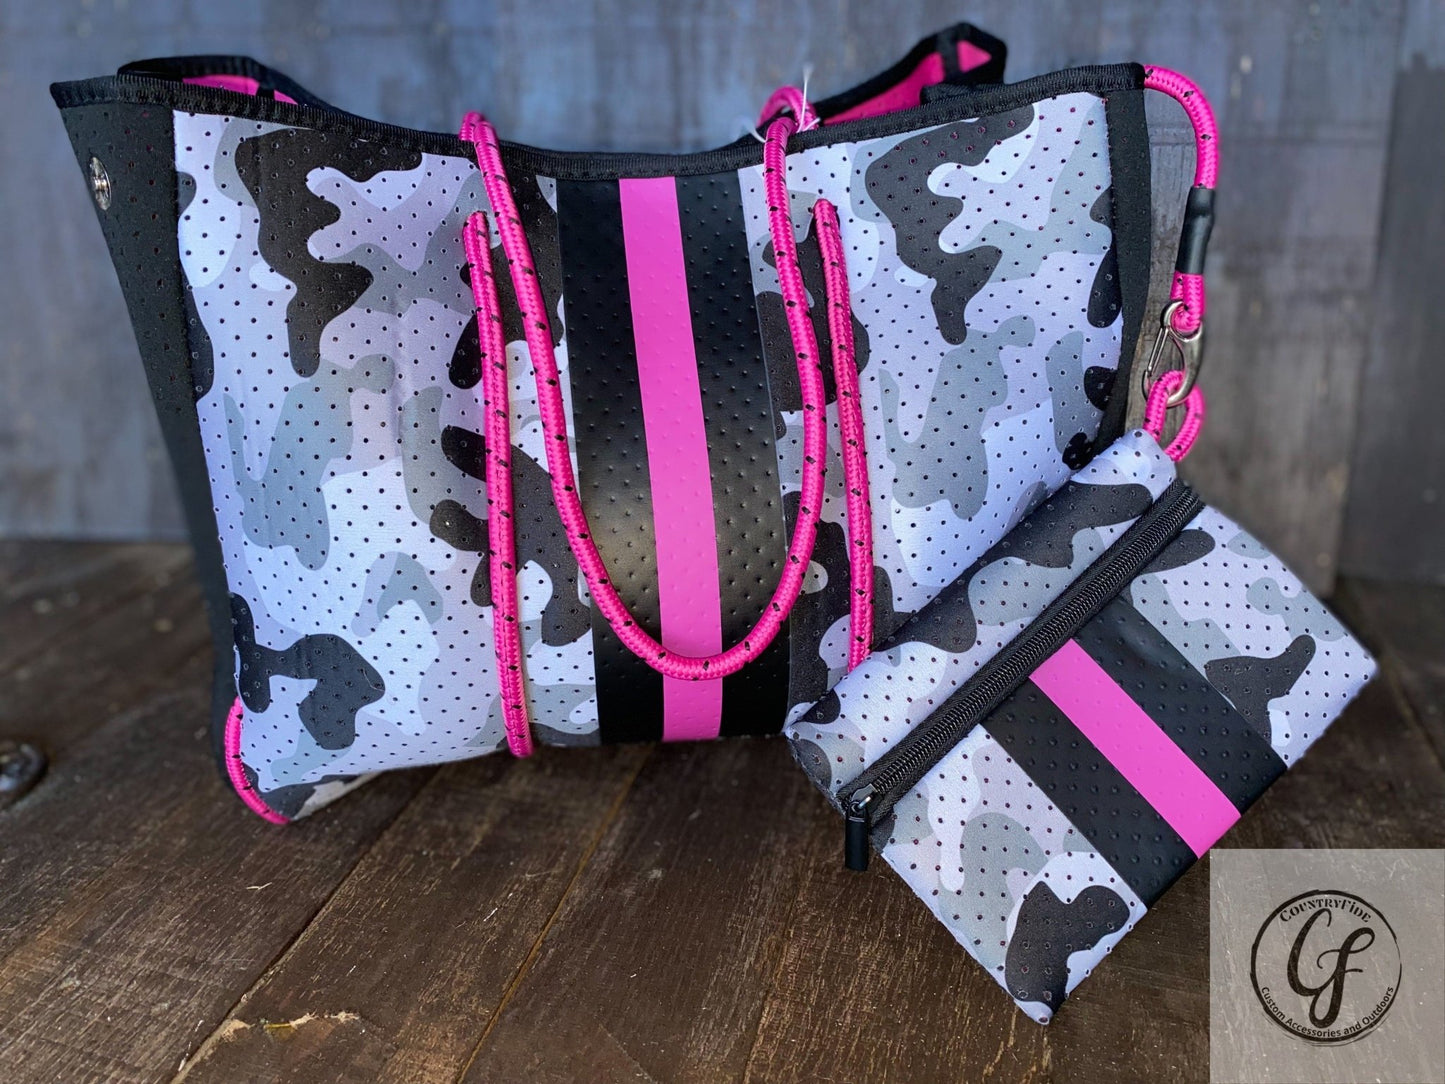 Neoprene Bag - CountryFide Custom Accessories and Outdoors